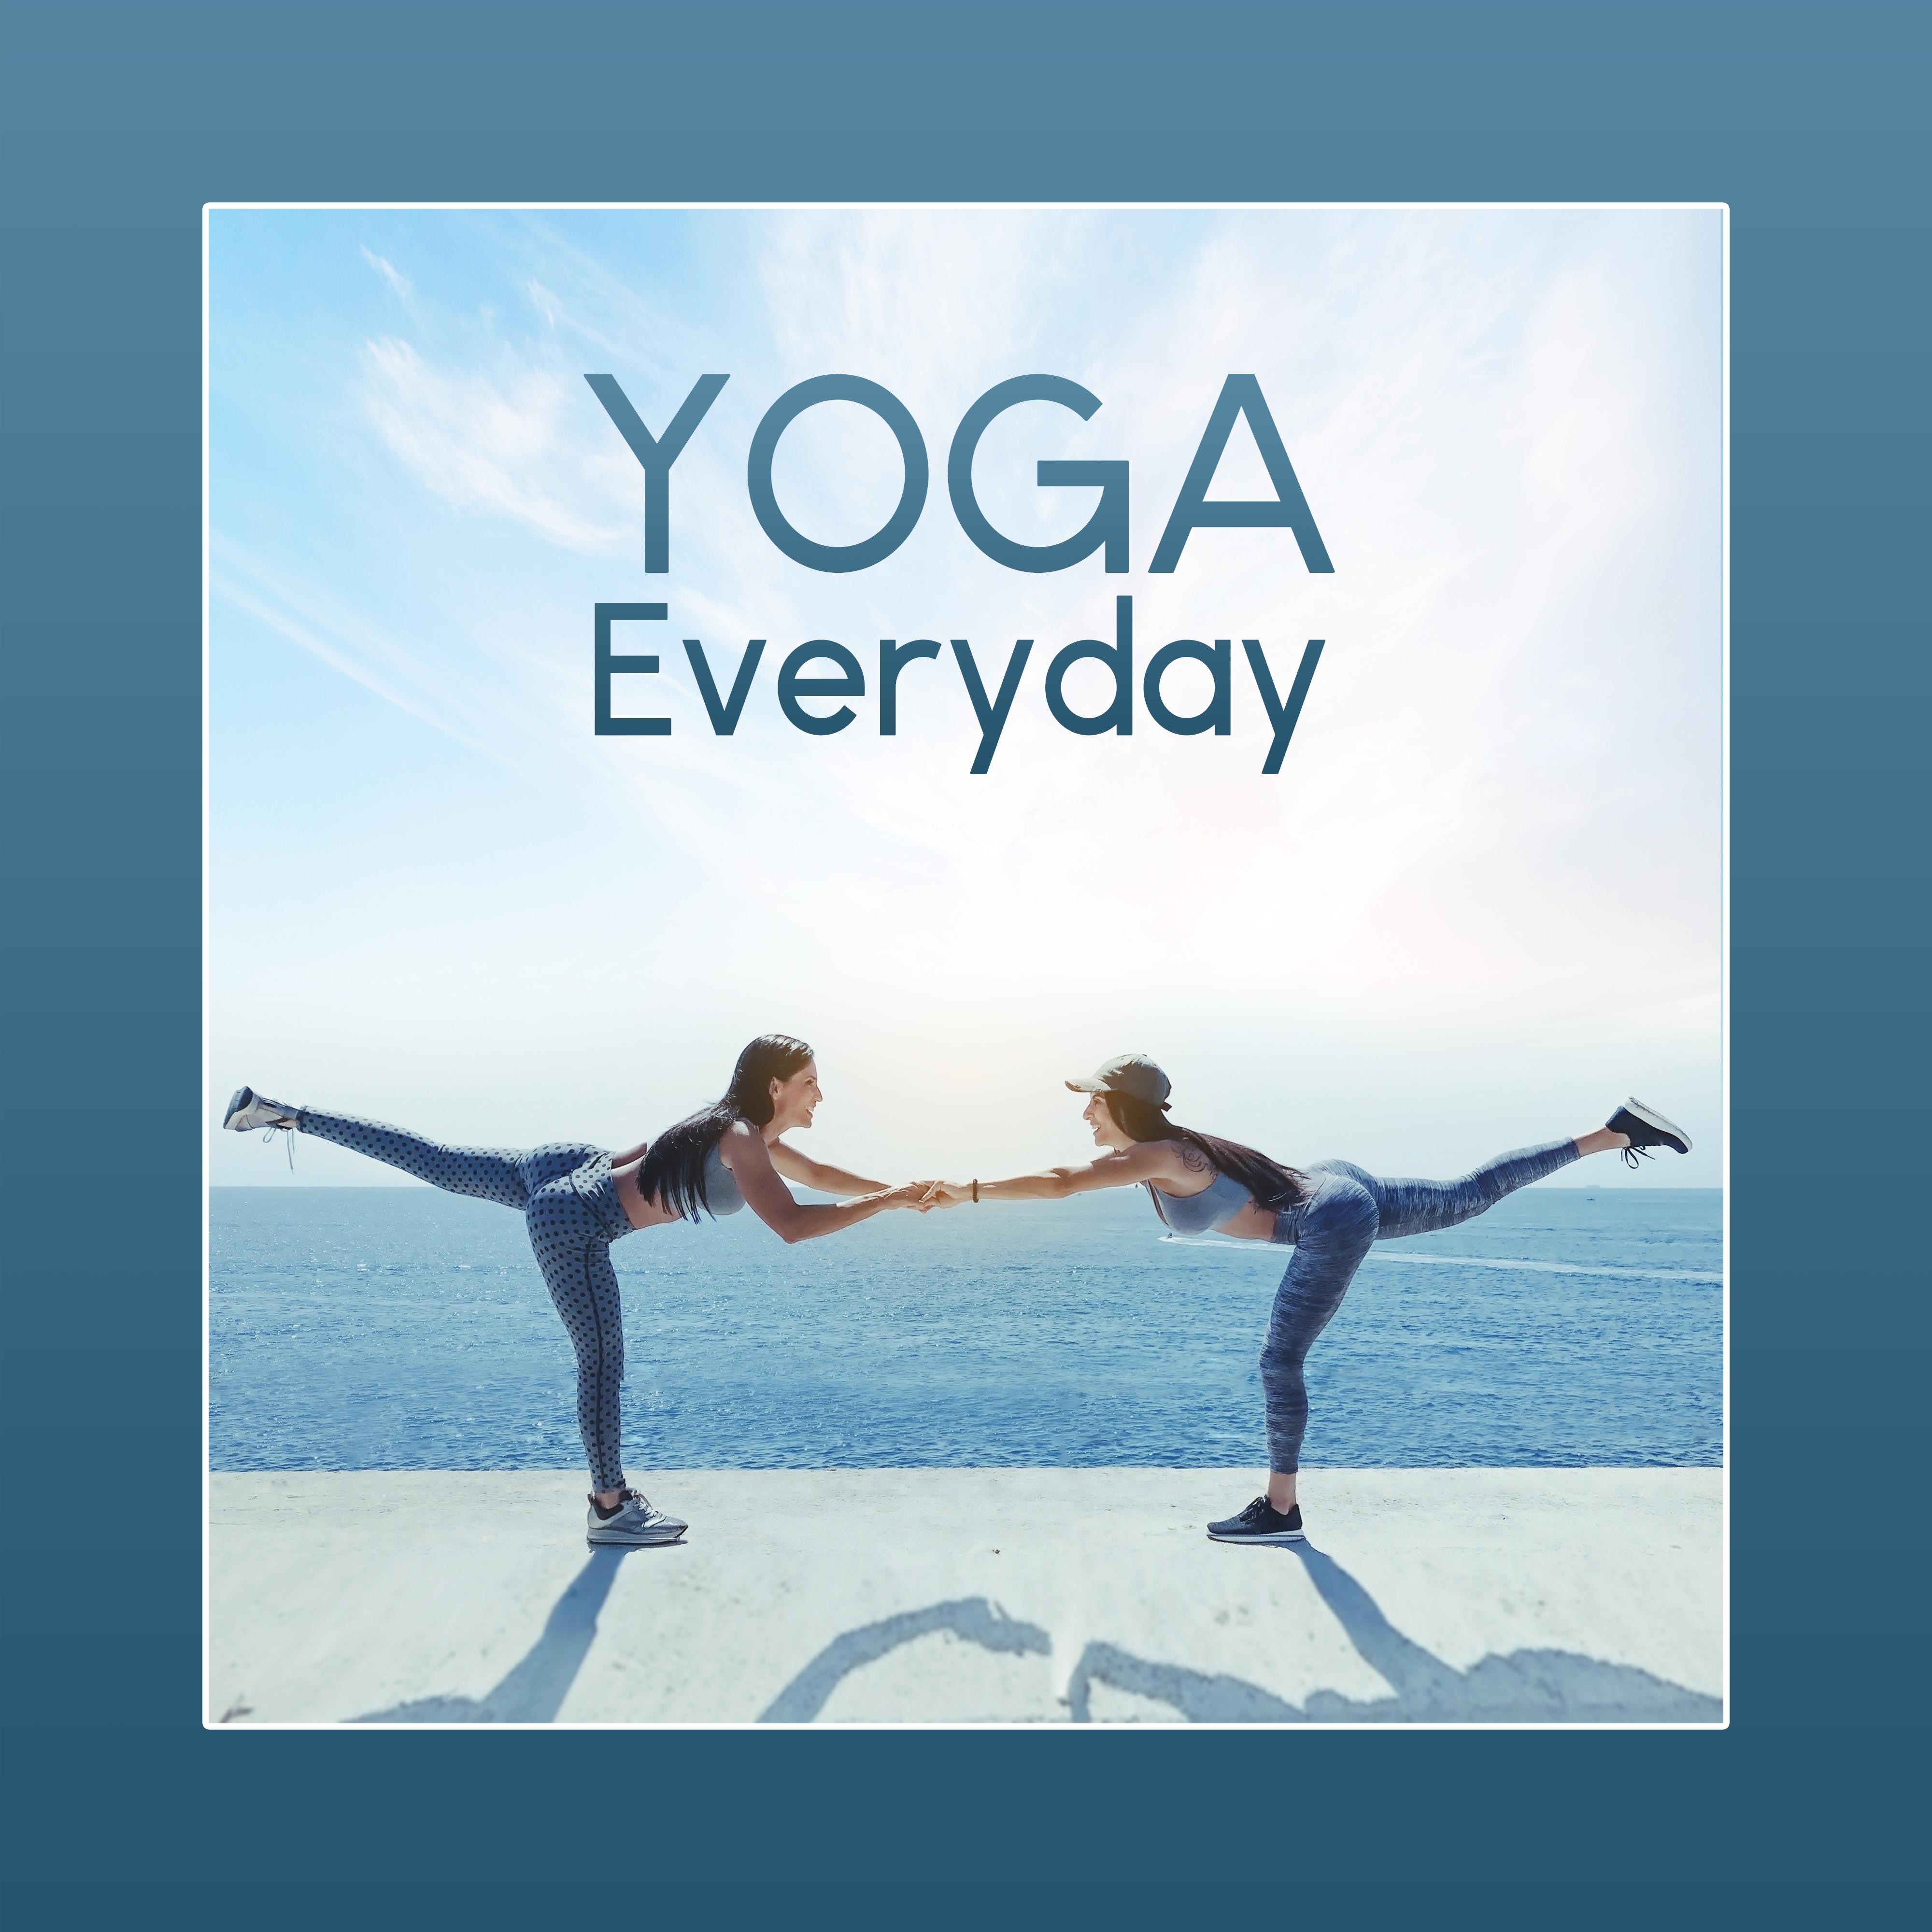 Yoga Everyday -  Buddhism Meditation, Yoga Lounge, Relaxed Body & Mind, Rest, Zen, Deep Meditation